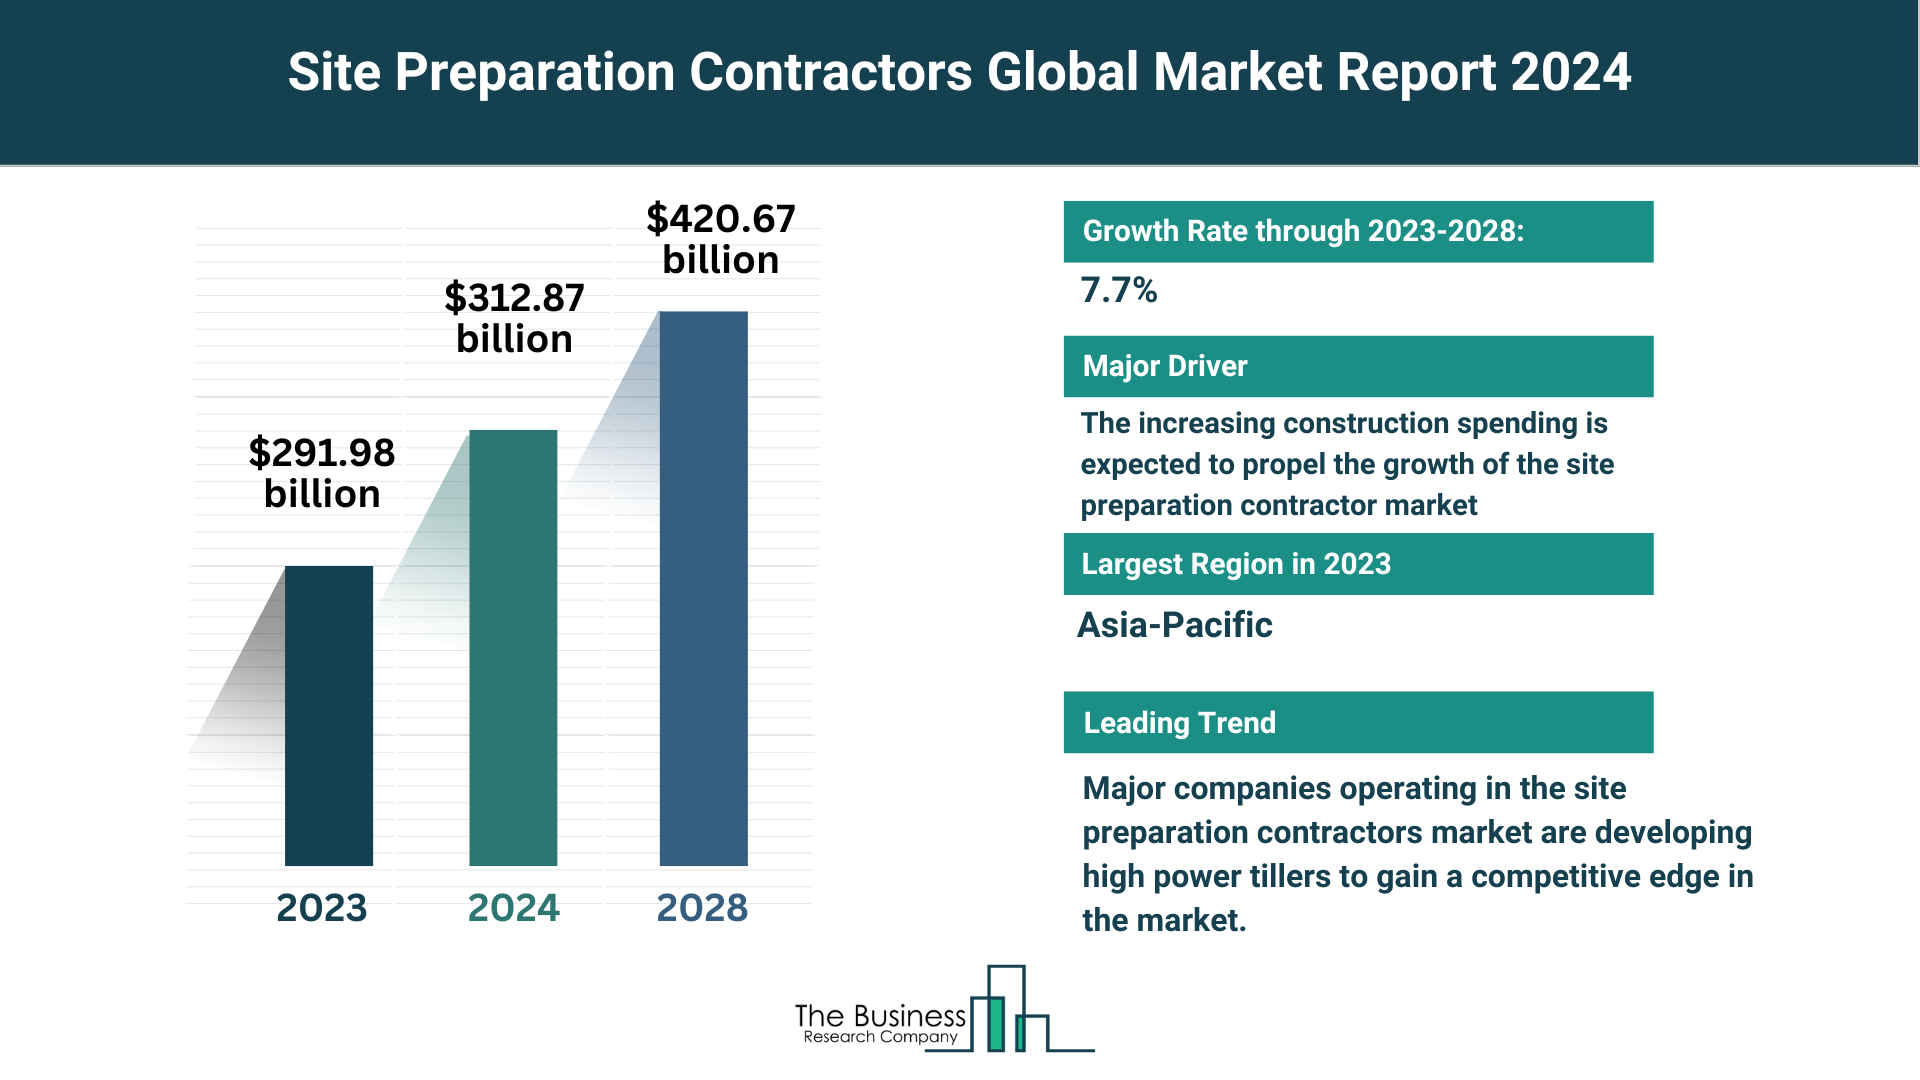 Global Site Preparation Contractors Market